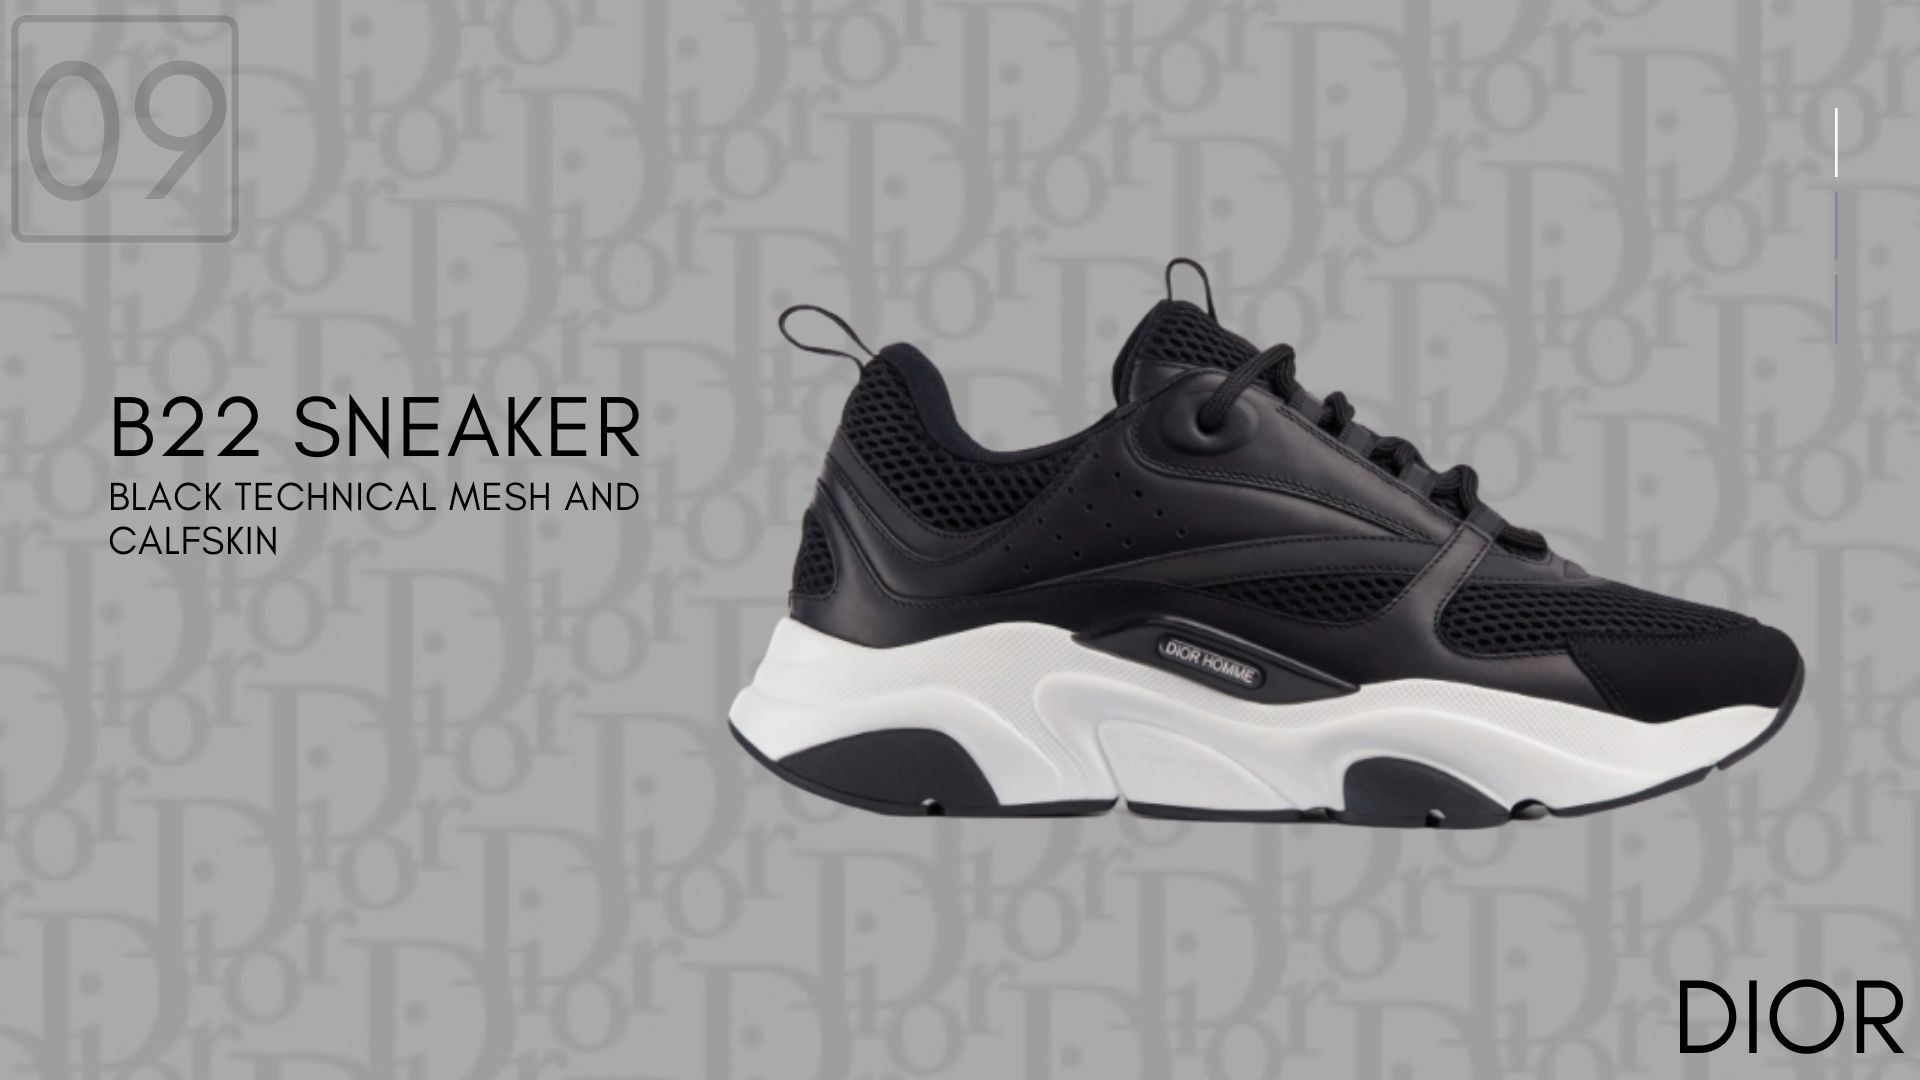 B22 Black Technical Mesh and Calfskin-Dior Sneakers-รองเท้าดิออร์-10 dior sneakers-dior 10 sneakers